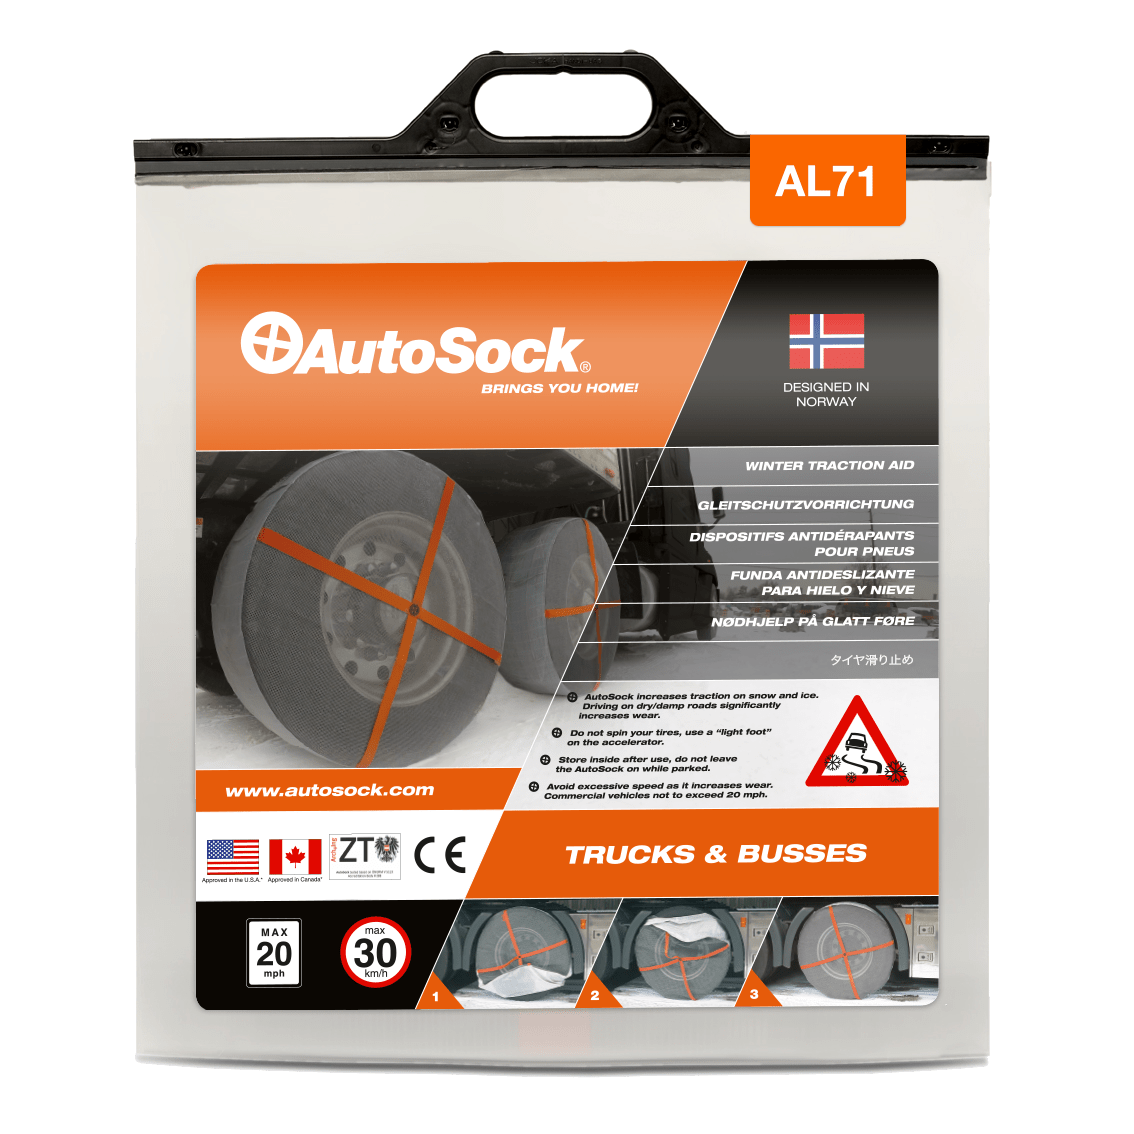 AutoSock AL 71 トラック用オートソックの製品パッケージ（正面図）